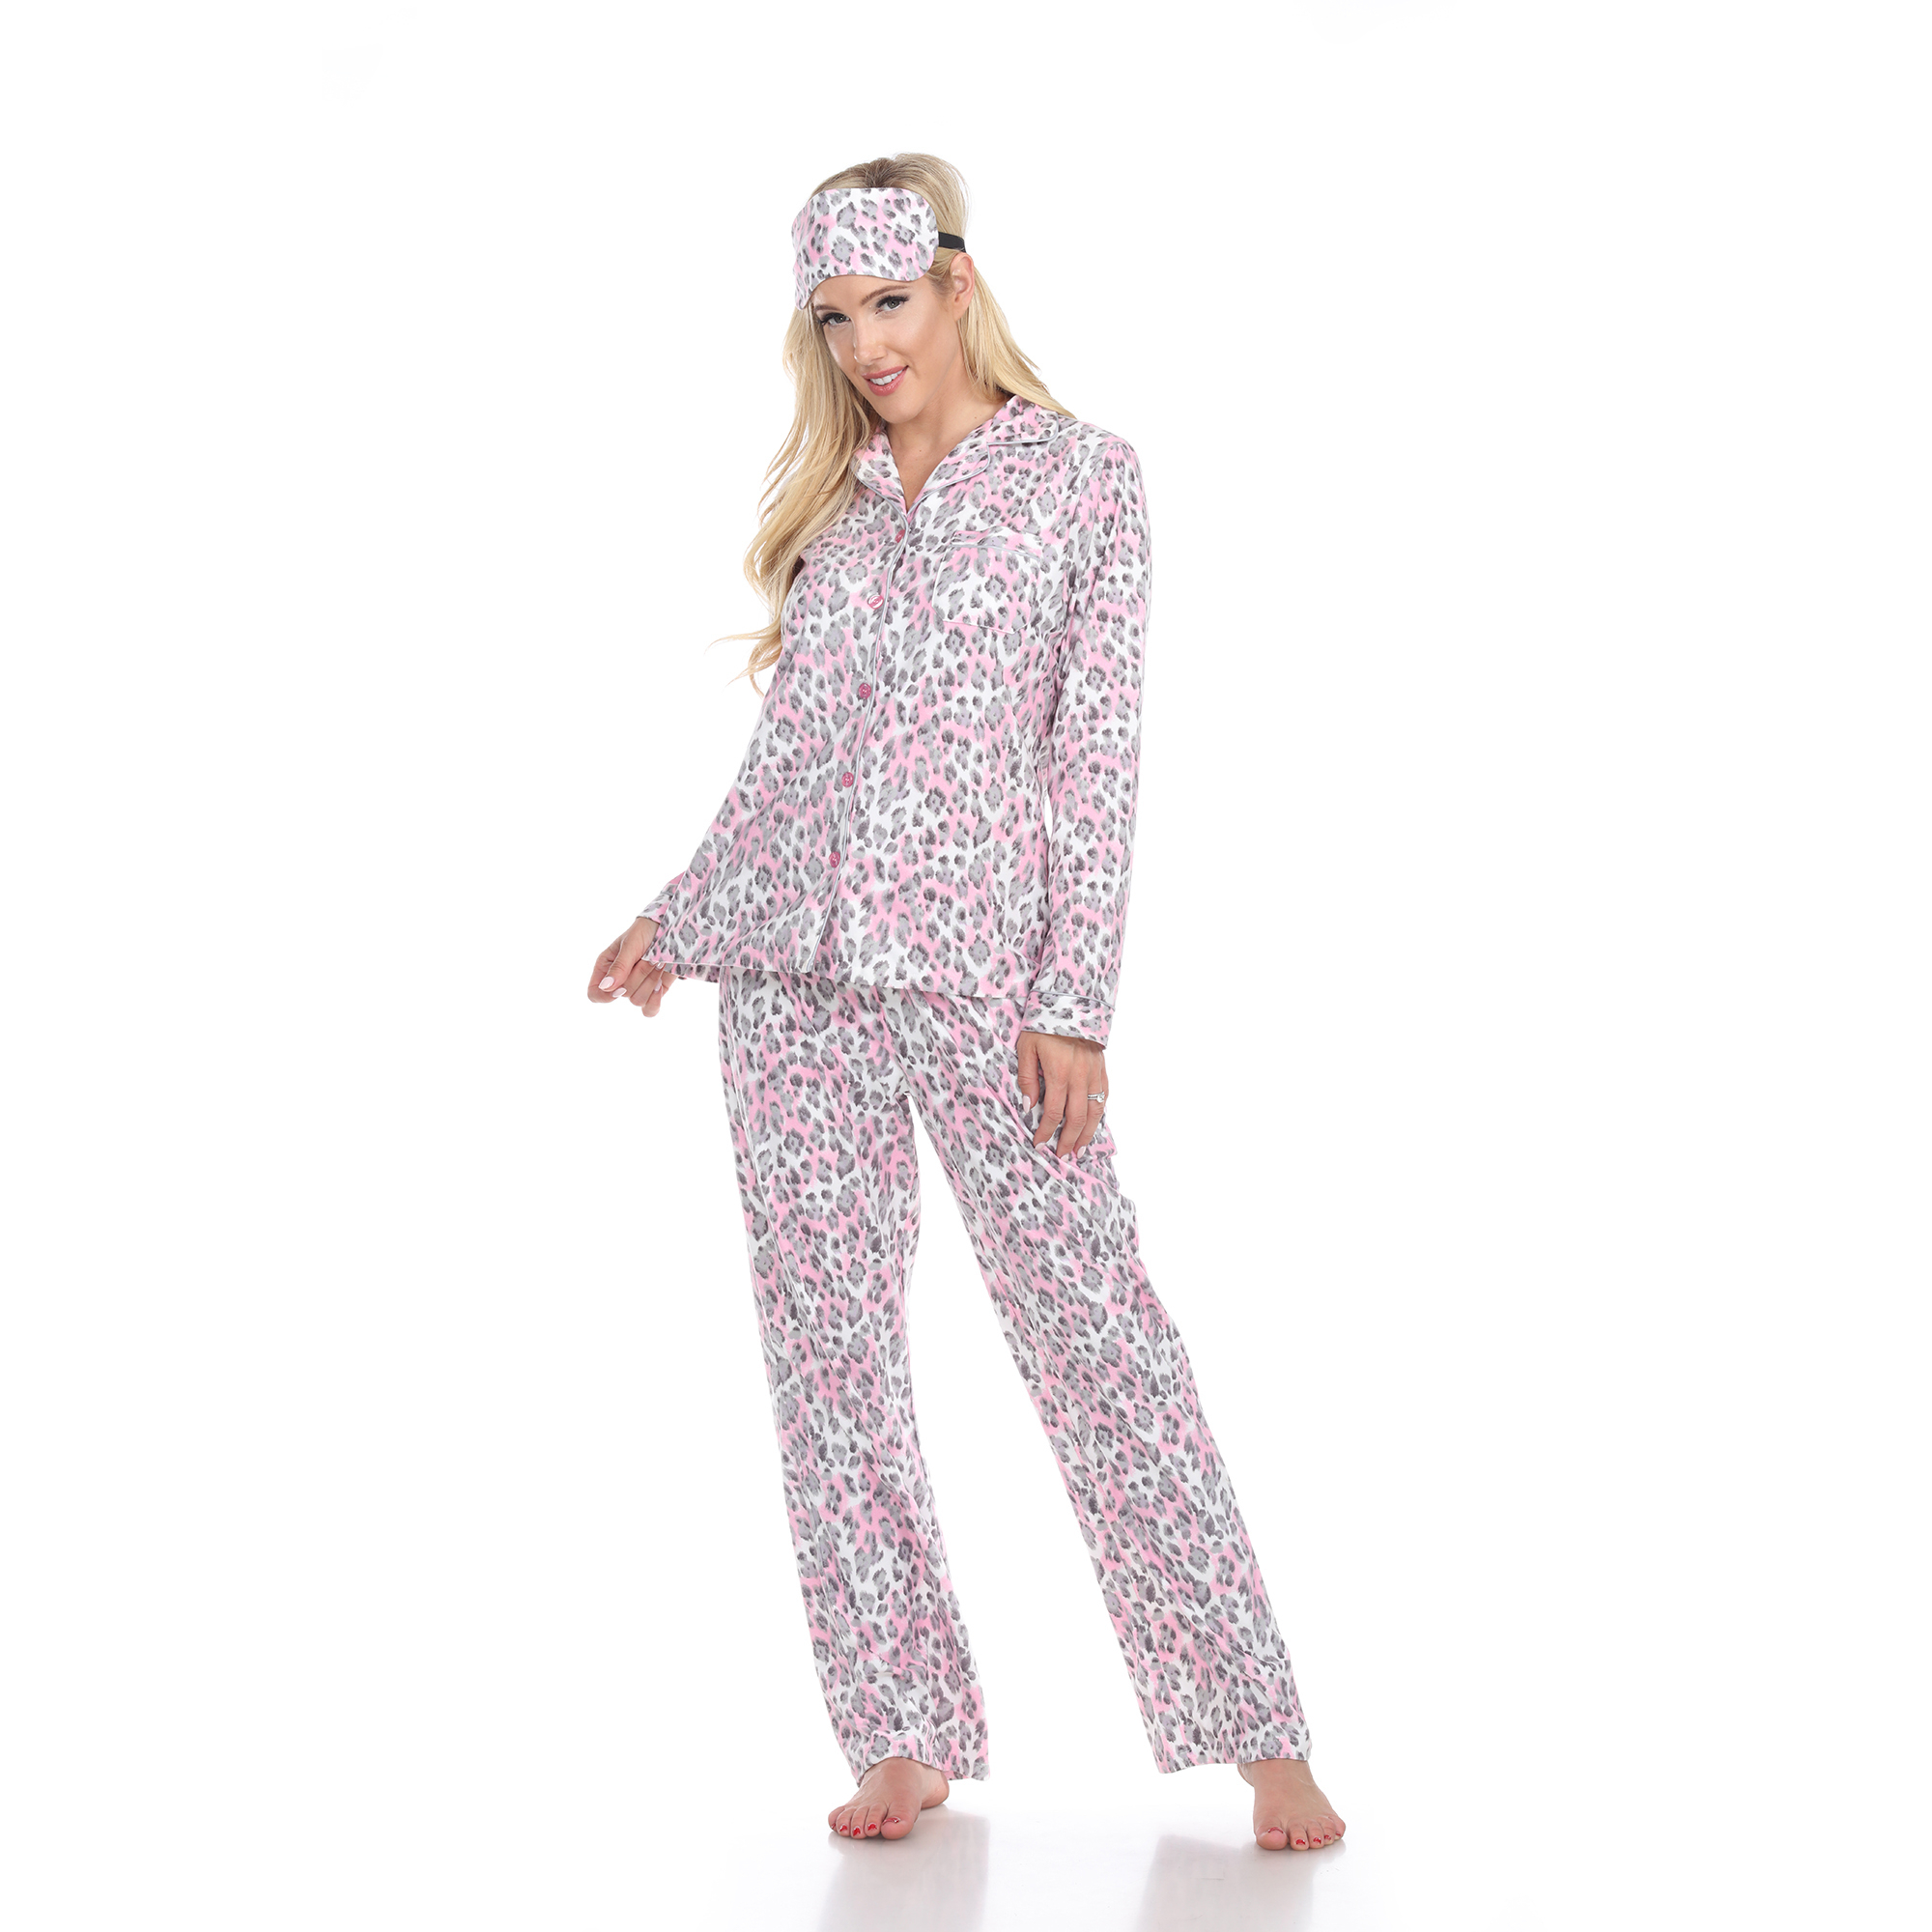 White Mark Women's Animal Print Three-Piece Pajama Set - Grey Cheetah, 4X